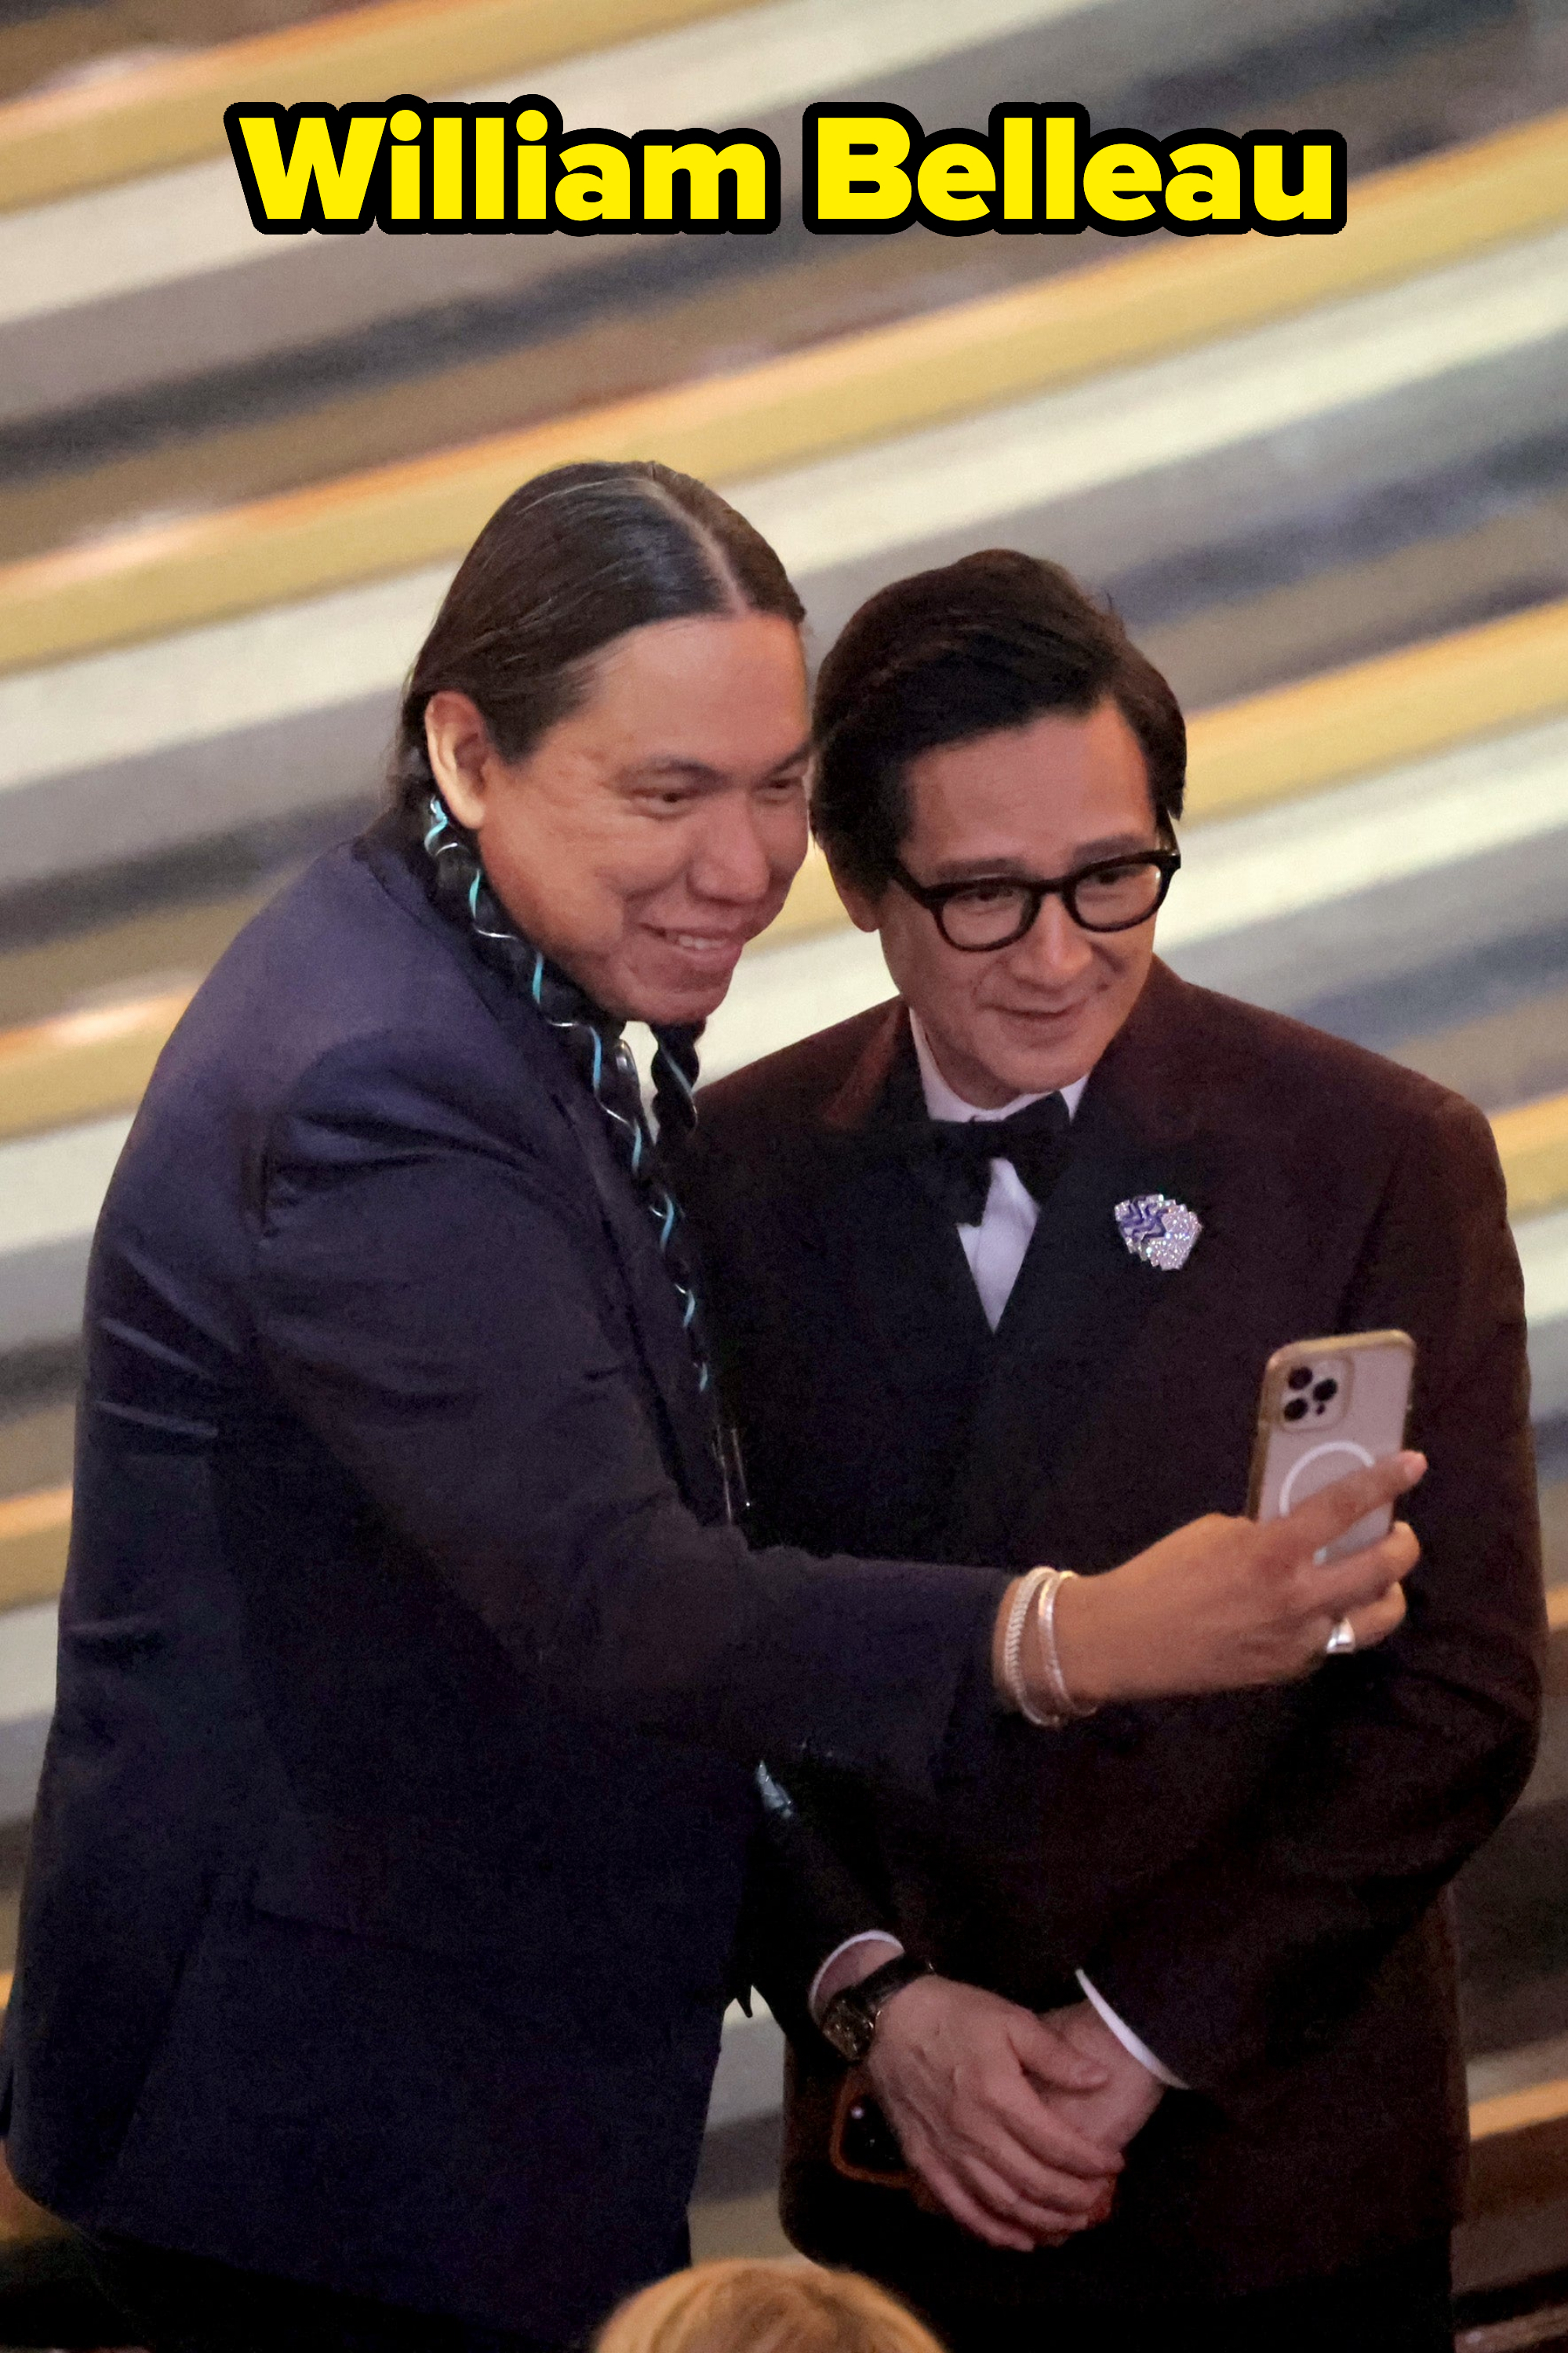 William Belleau and Ke Huy Quan taking a selfie